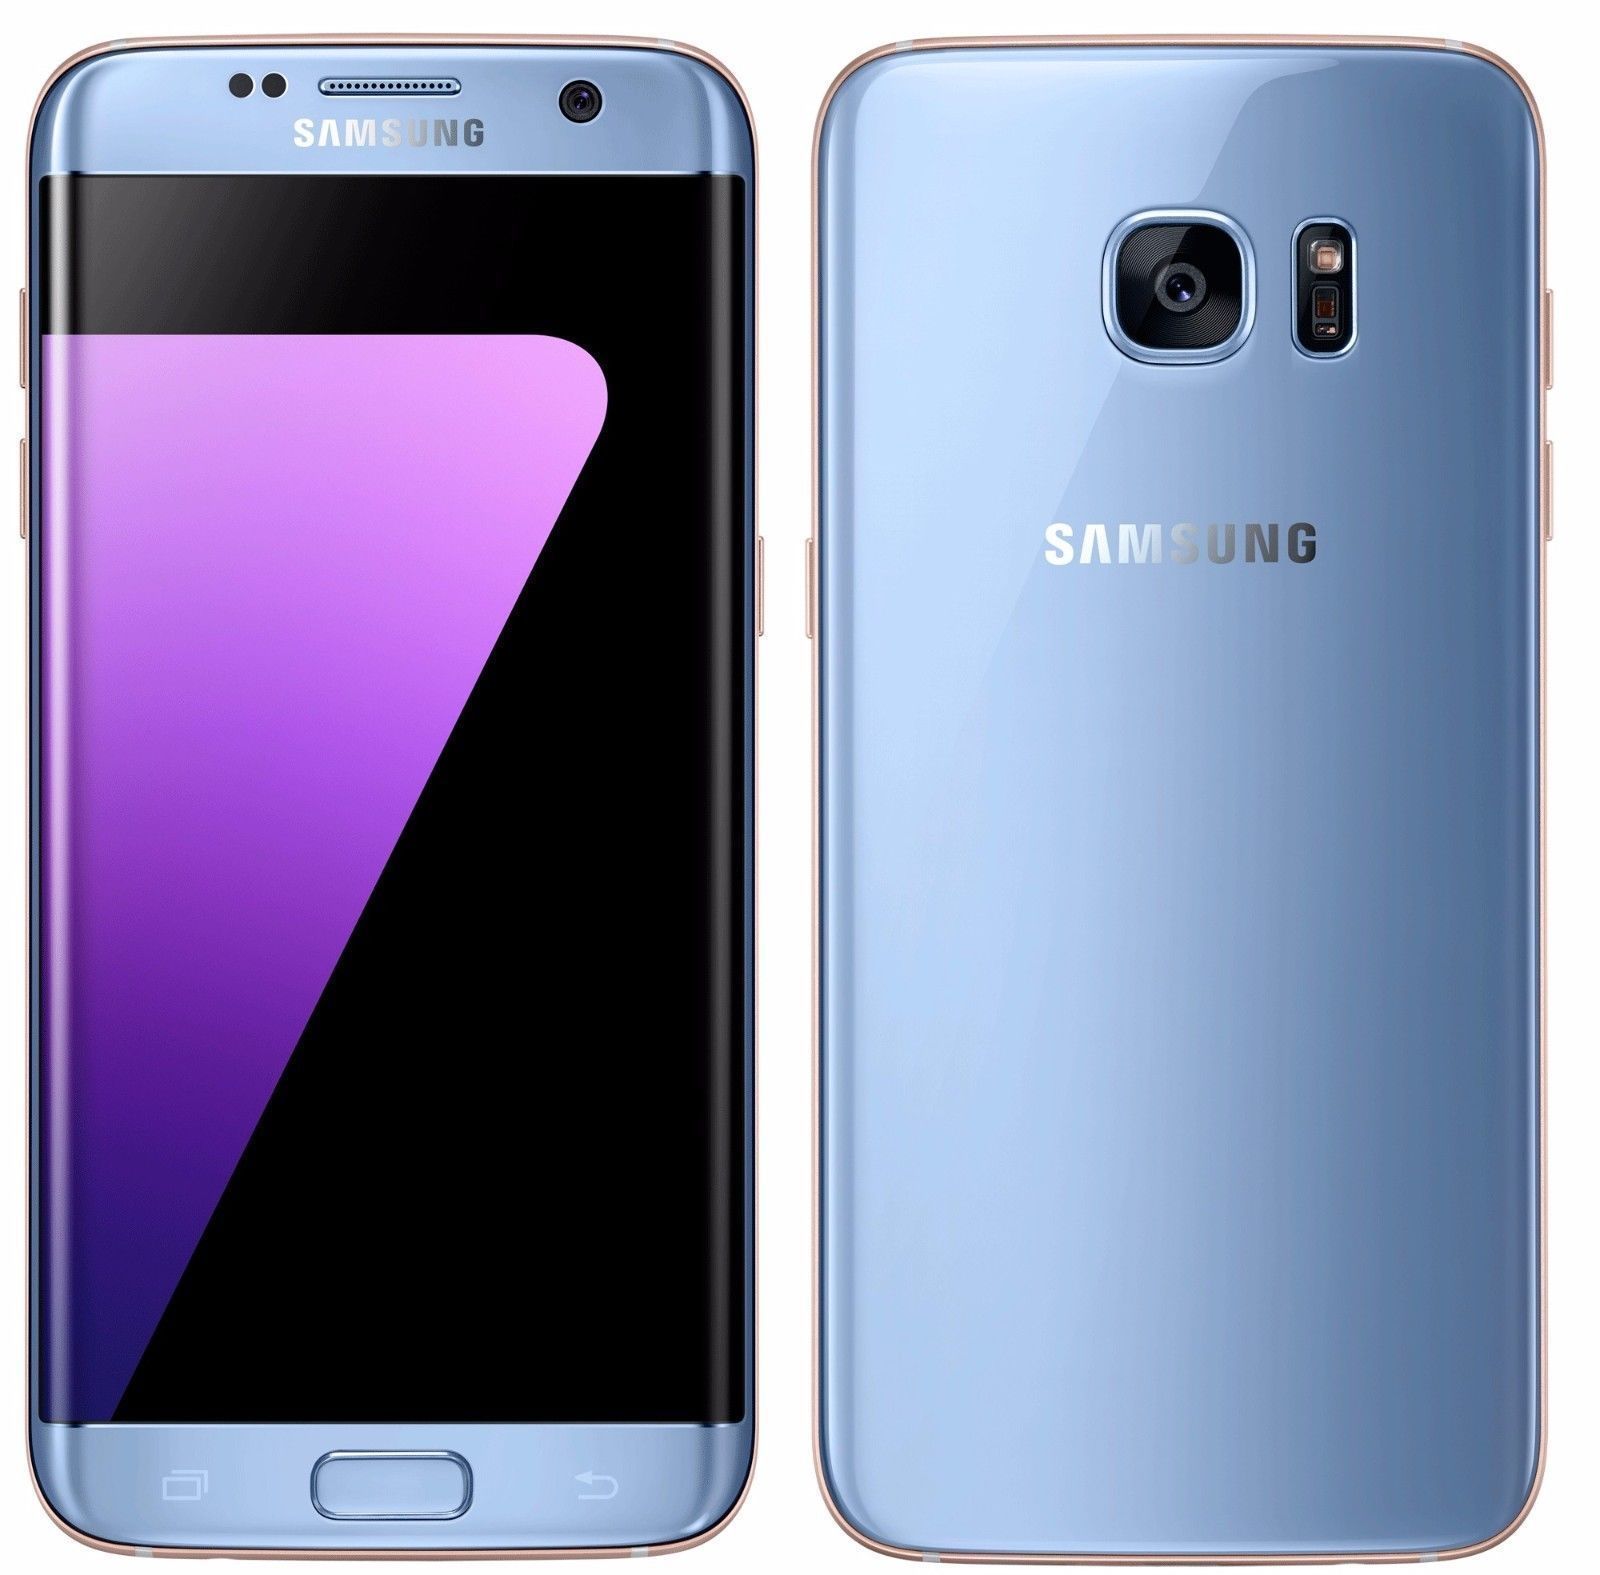 Samsung Galaxy S7 edge SM-G935 - 32GB - Blue Coral (AT&T) Smartphone ...